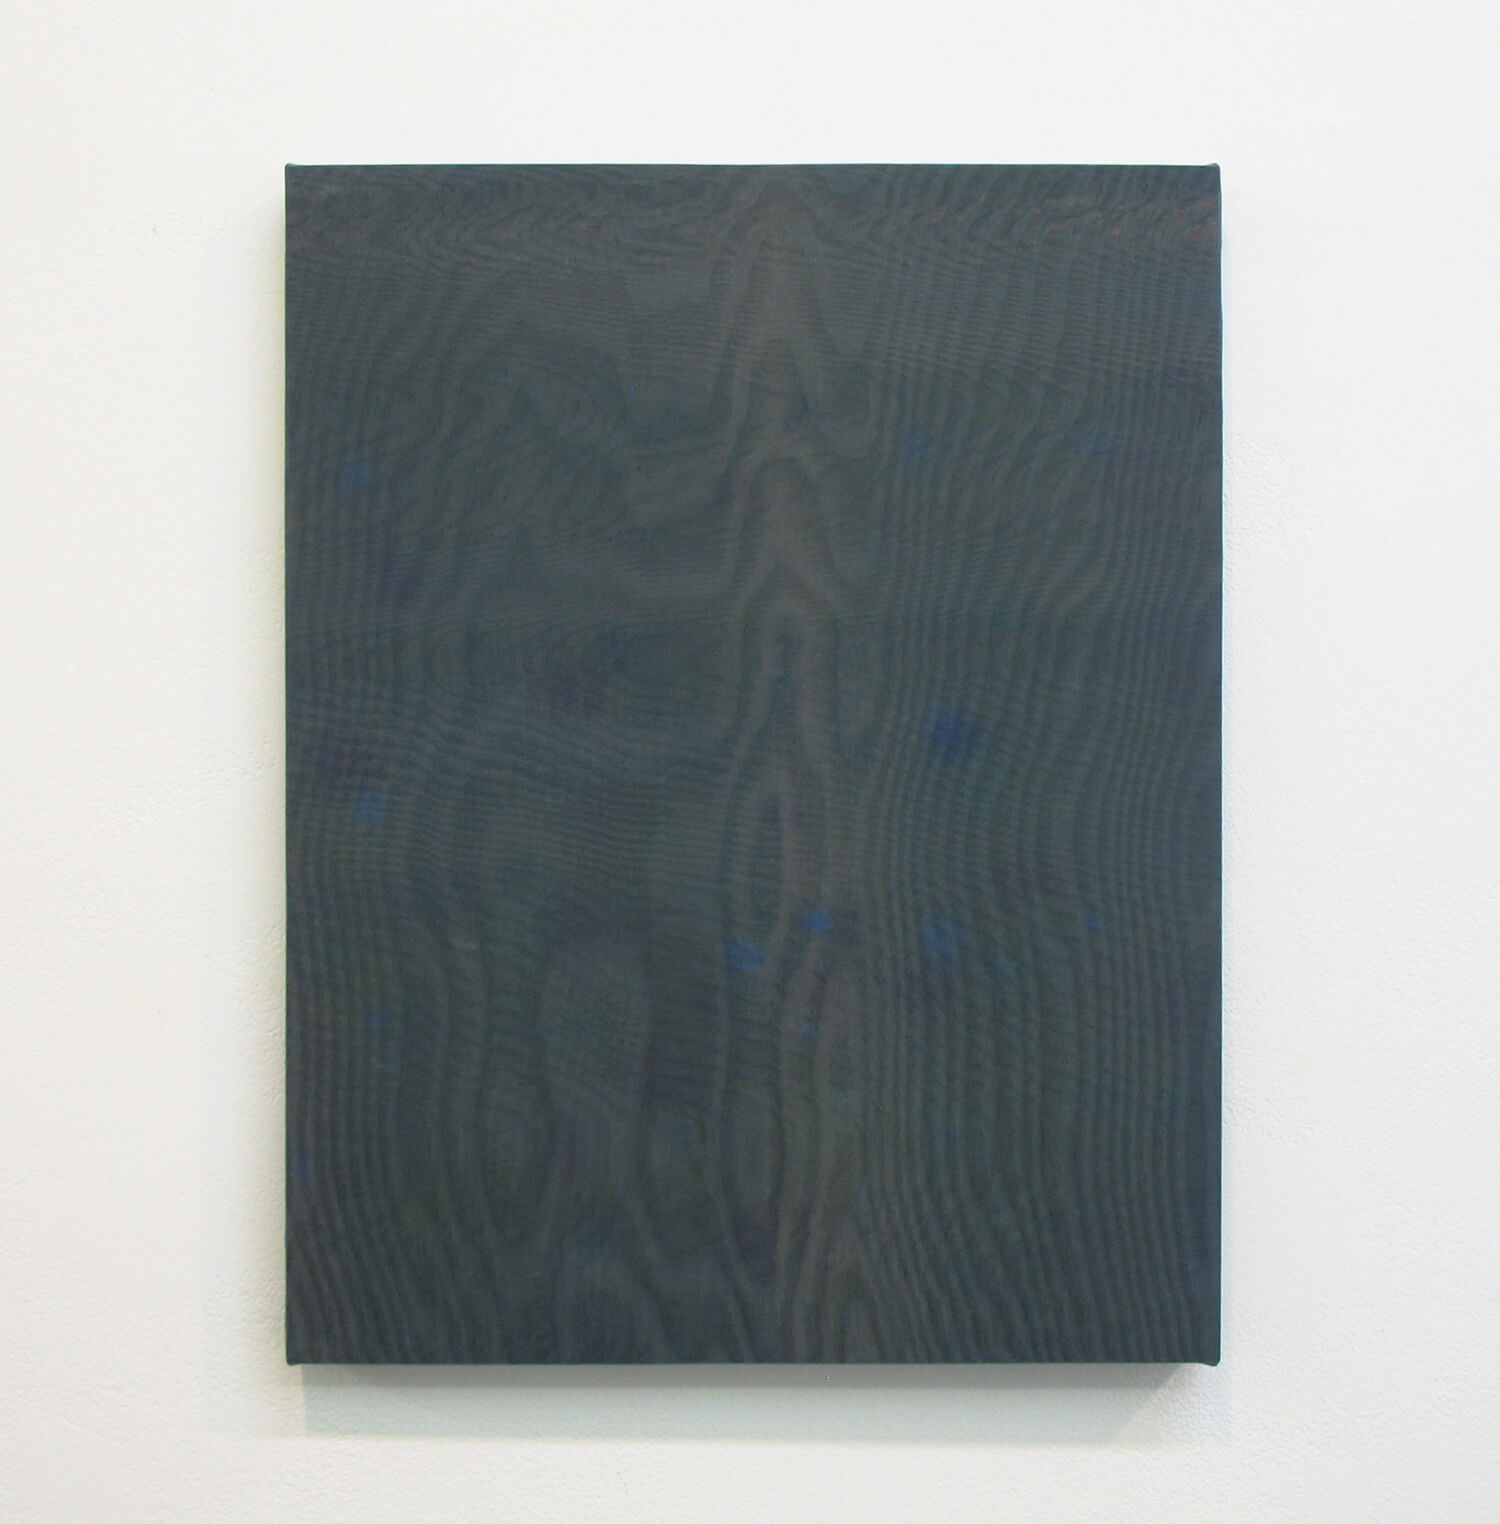 drops #7<br>
Acrylic, glass organdy, cotton, panel 41 x 33 cm 2013